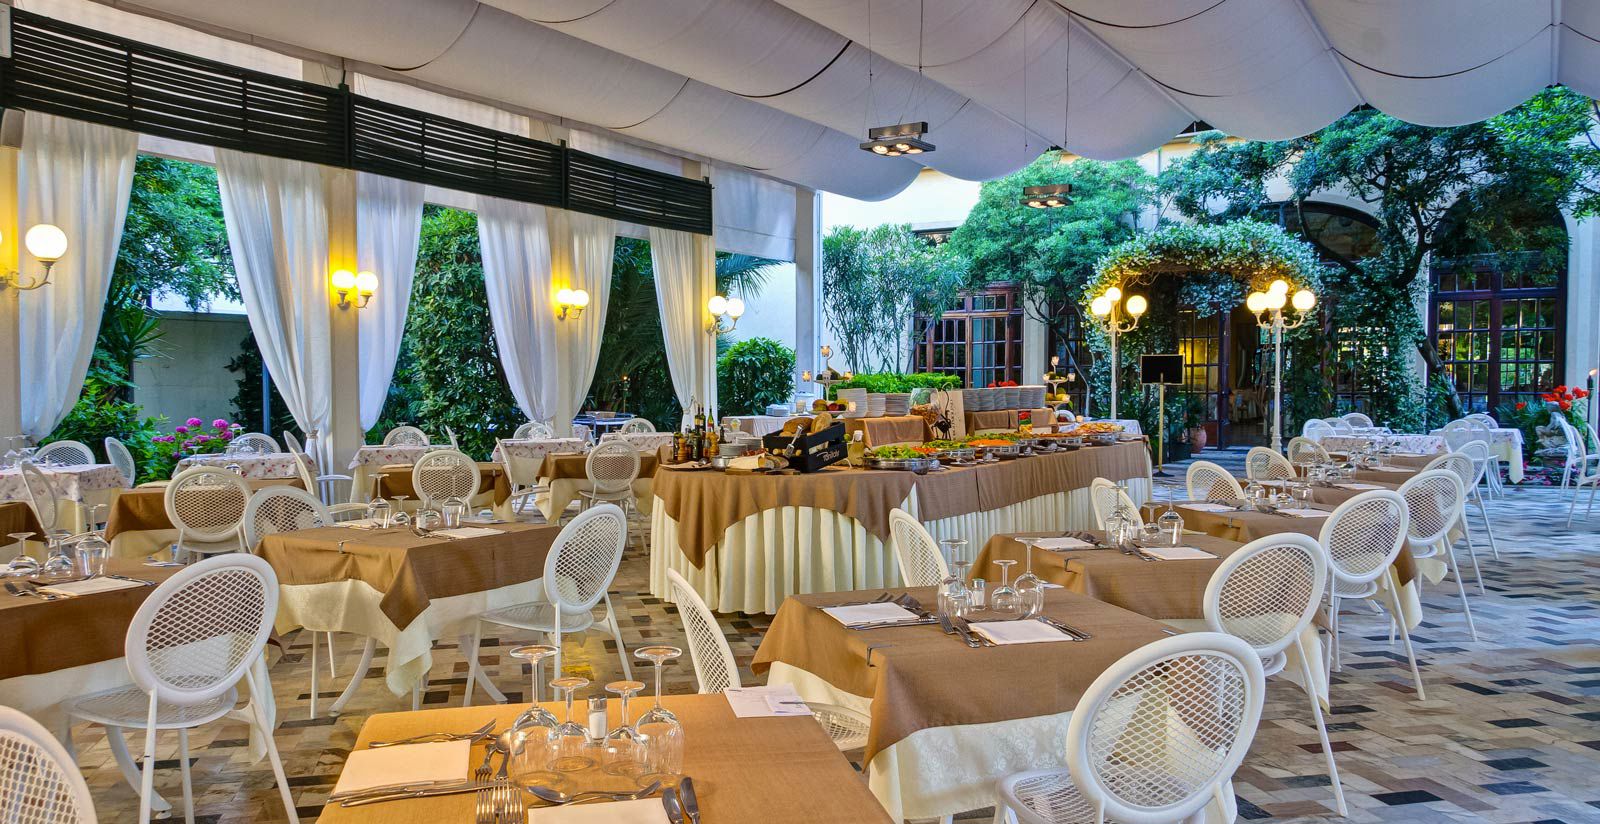 Book a table at the GH Royal Viareggio restaurant in Versilia